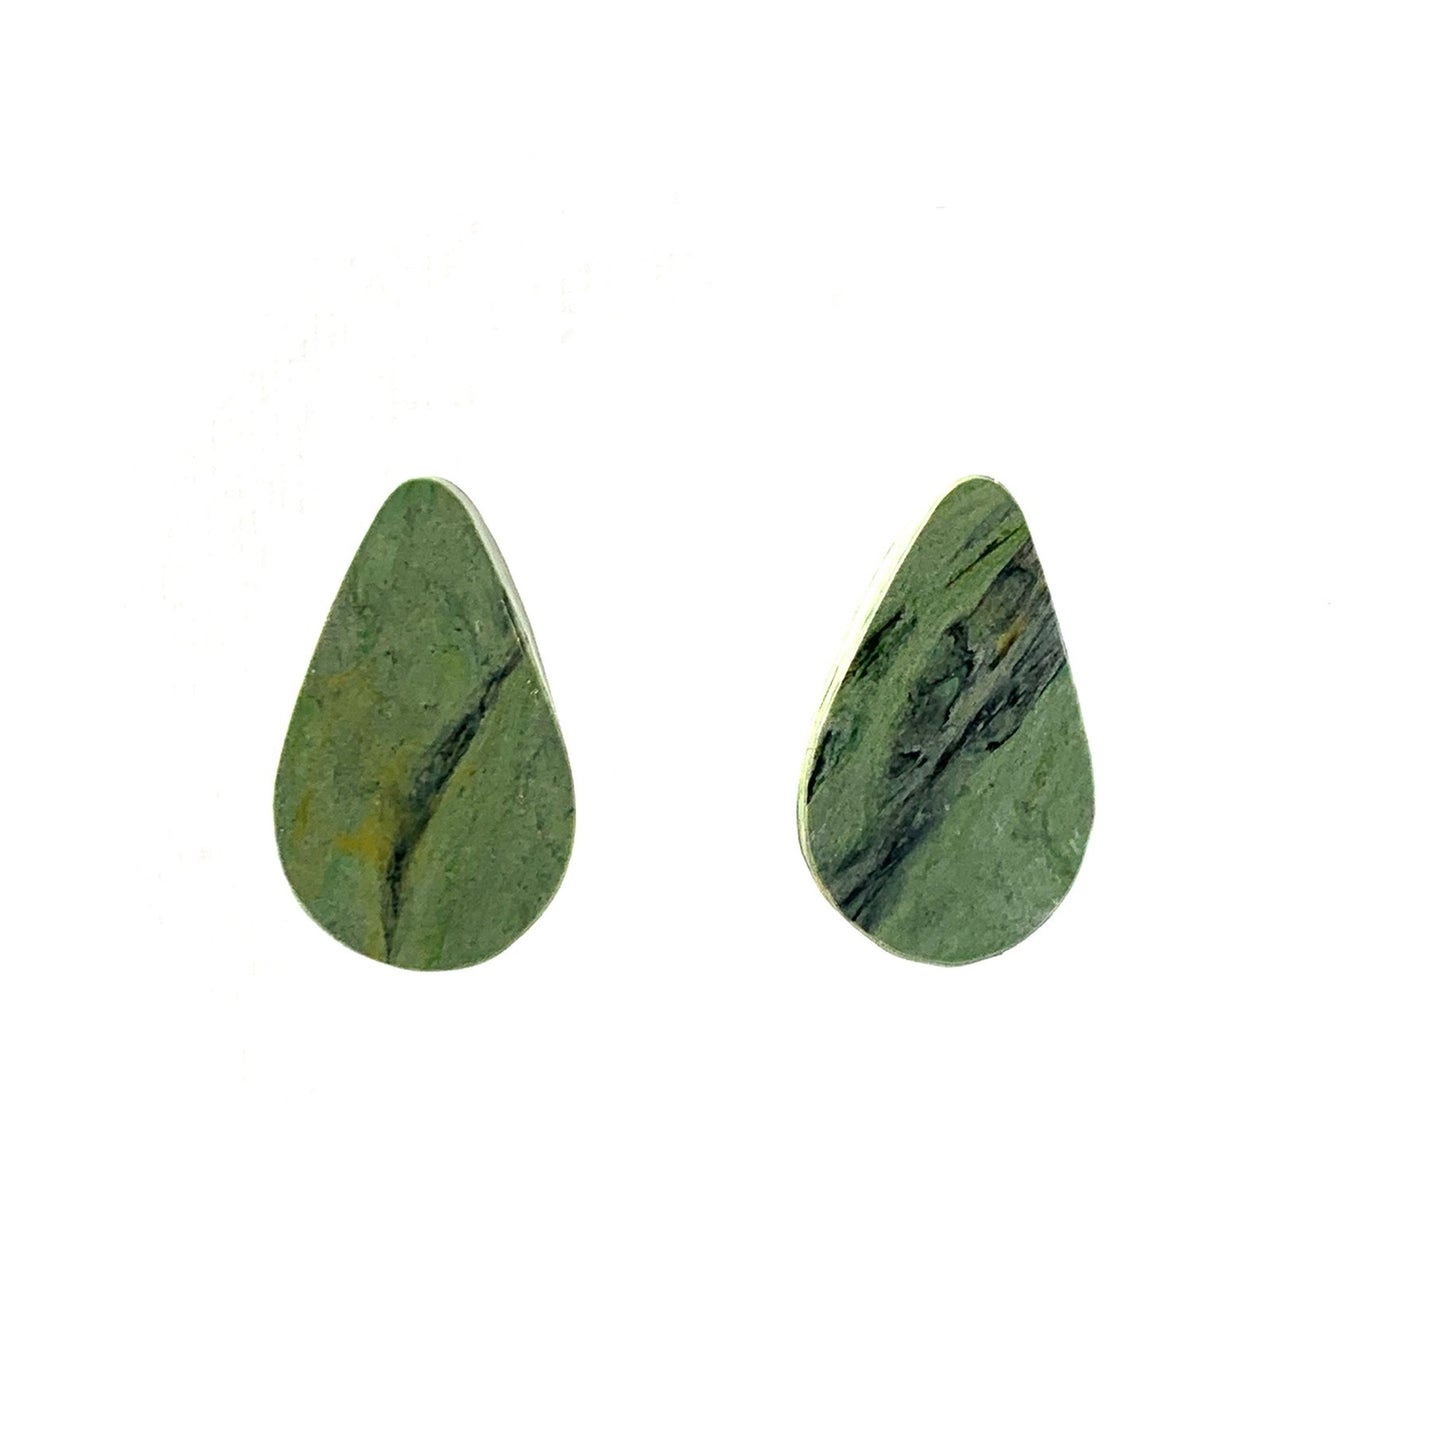 Sustainable Earrings Teardrop Green Studs Handmade in the UK Christmas Gift for her 